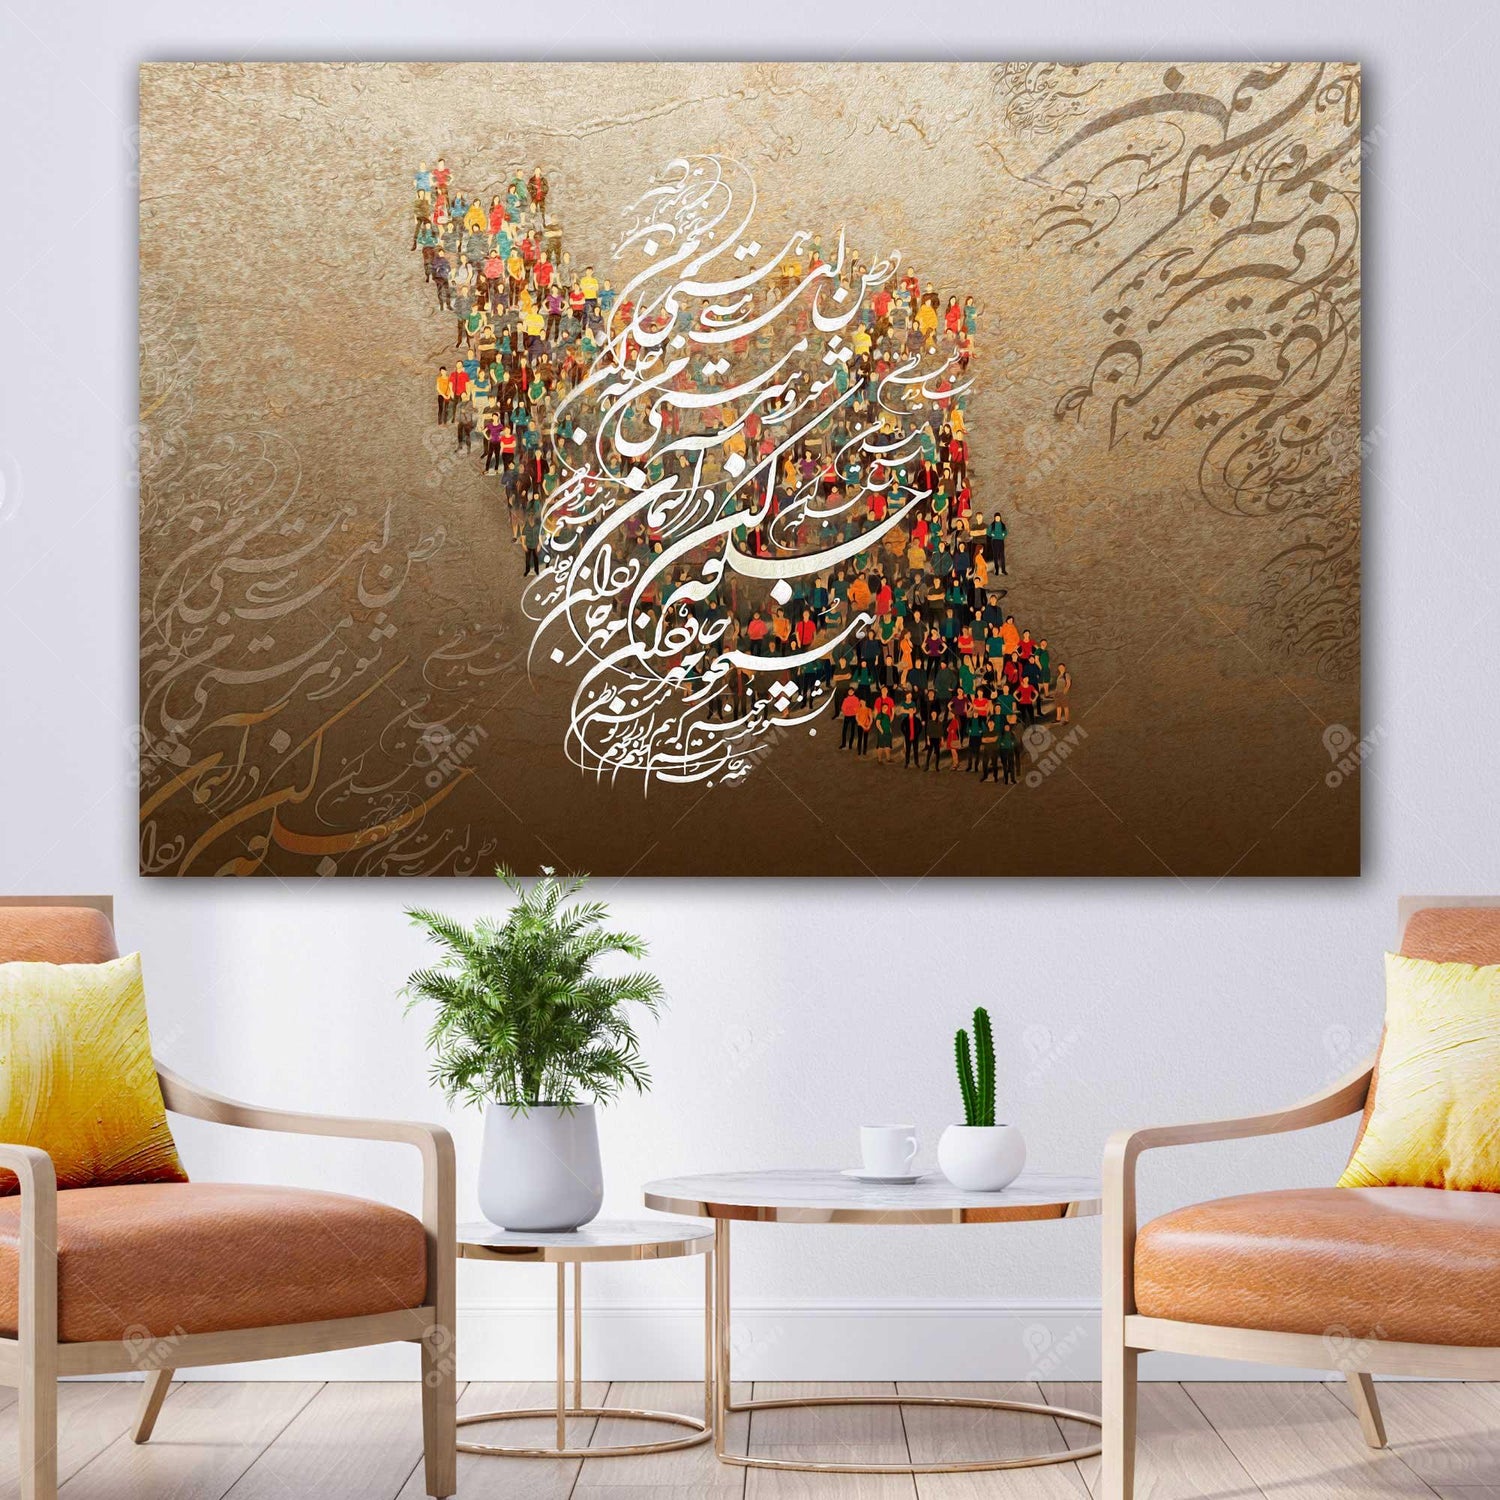 نامِ جاوید وطن Persian calligraphy wall art, High Quality and Ready to Hang. This Modern Persian Wall décor completes and elevates your home. Amazing and eye-catching for your home or office.